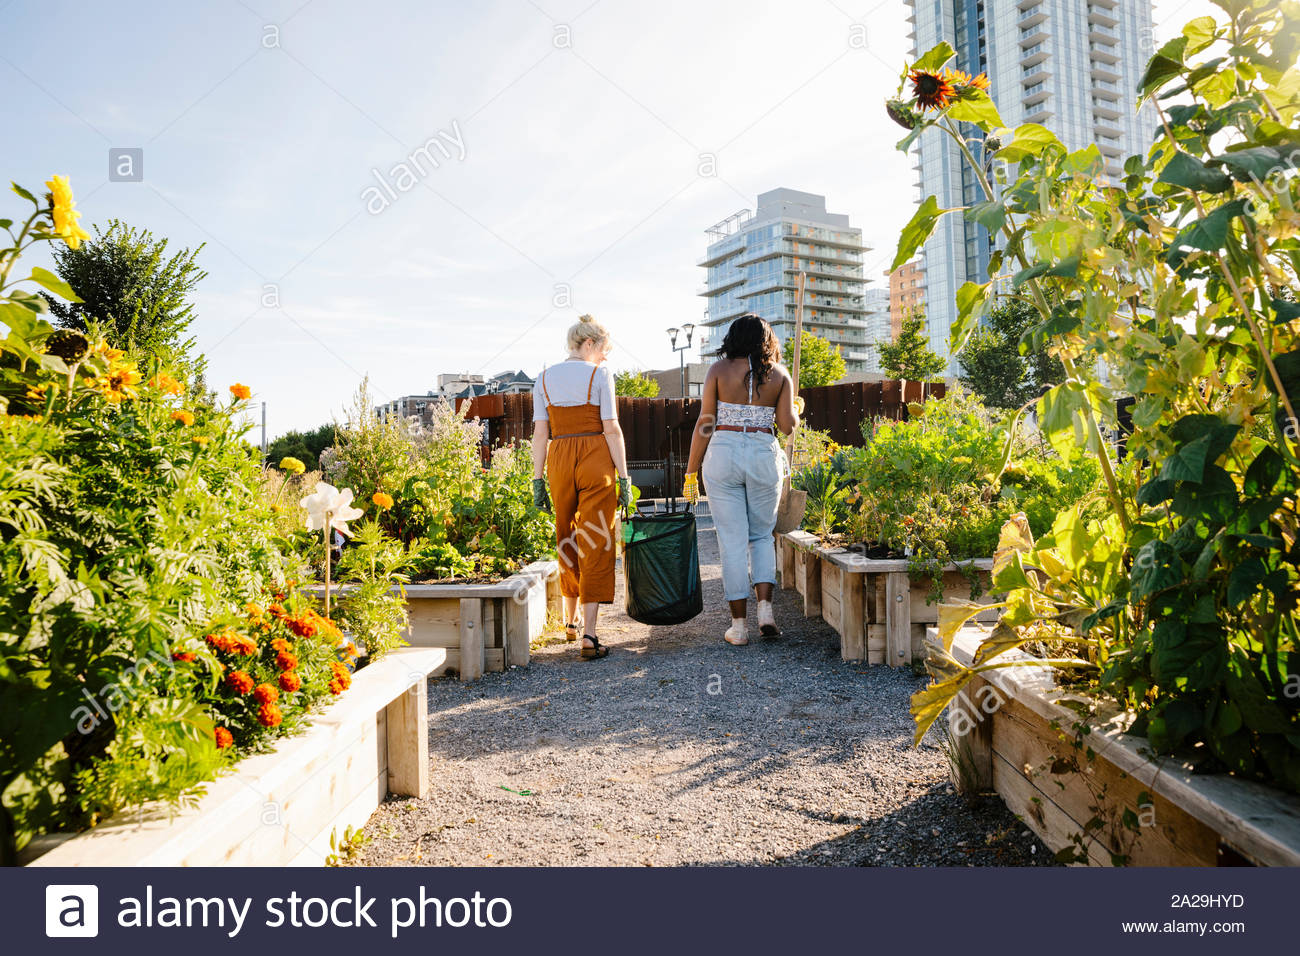 Young women in sunny, urban community garden Stock Photo